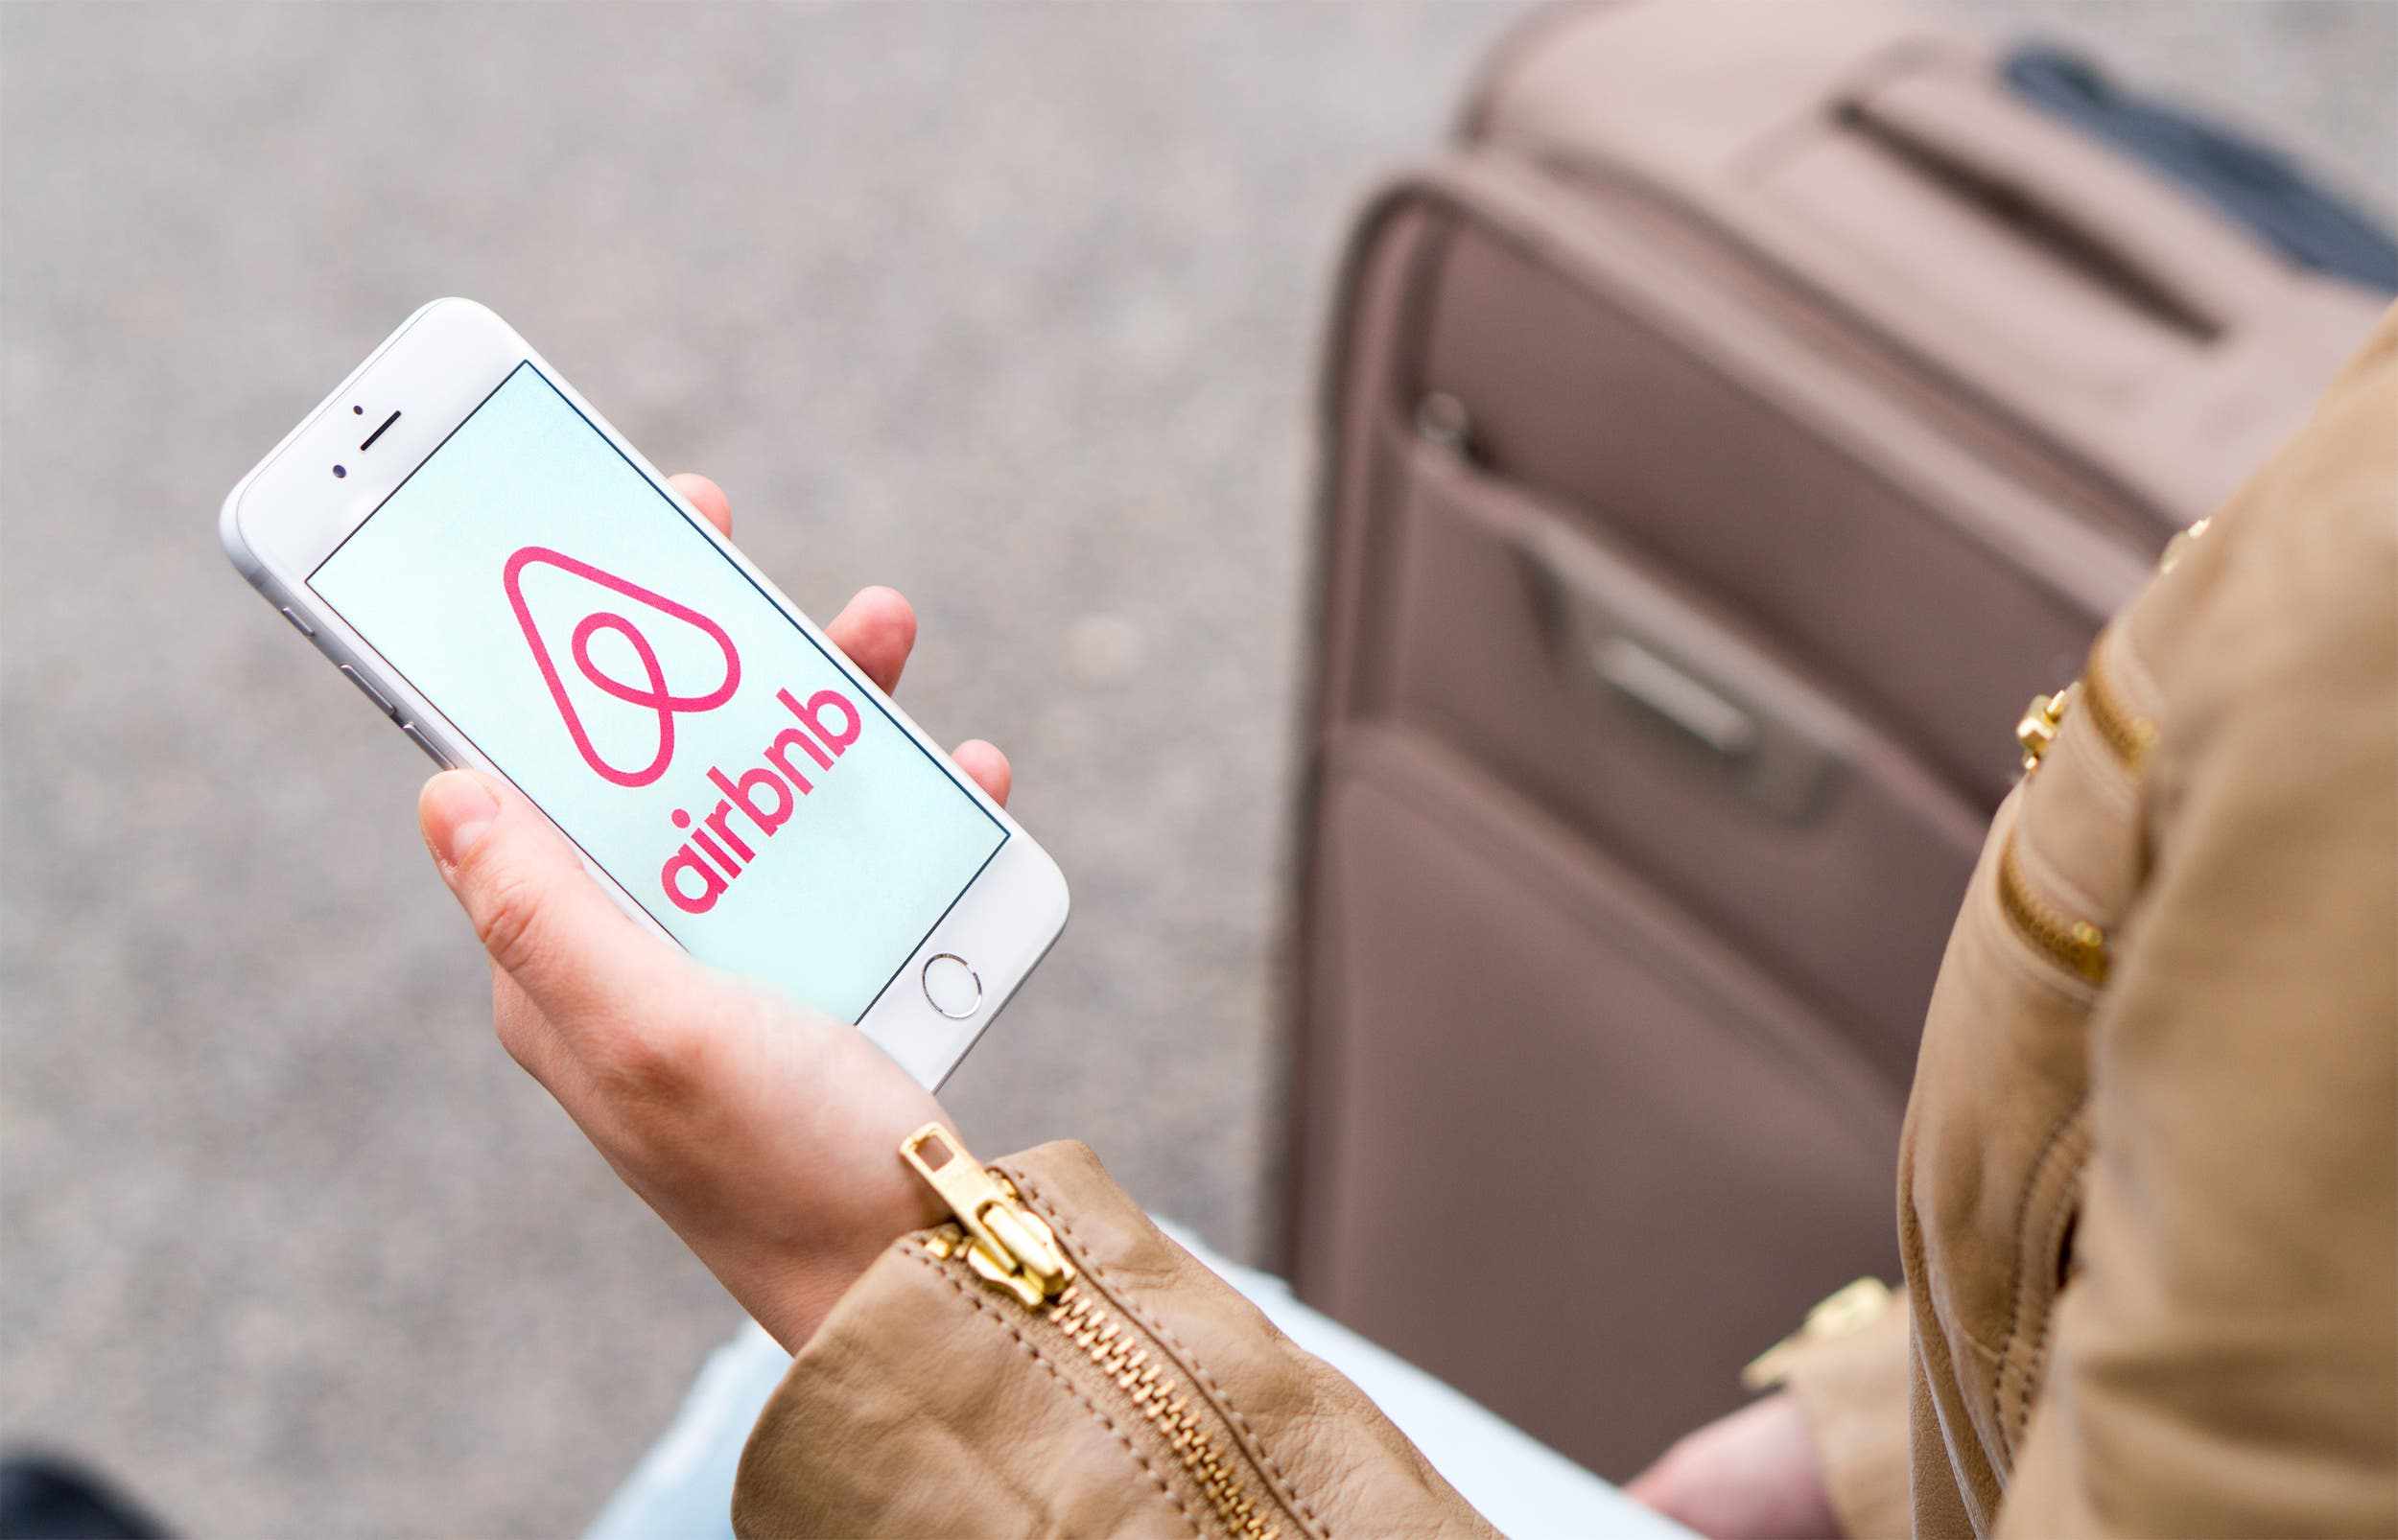 dubai,workers,hub,remote,airbnb